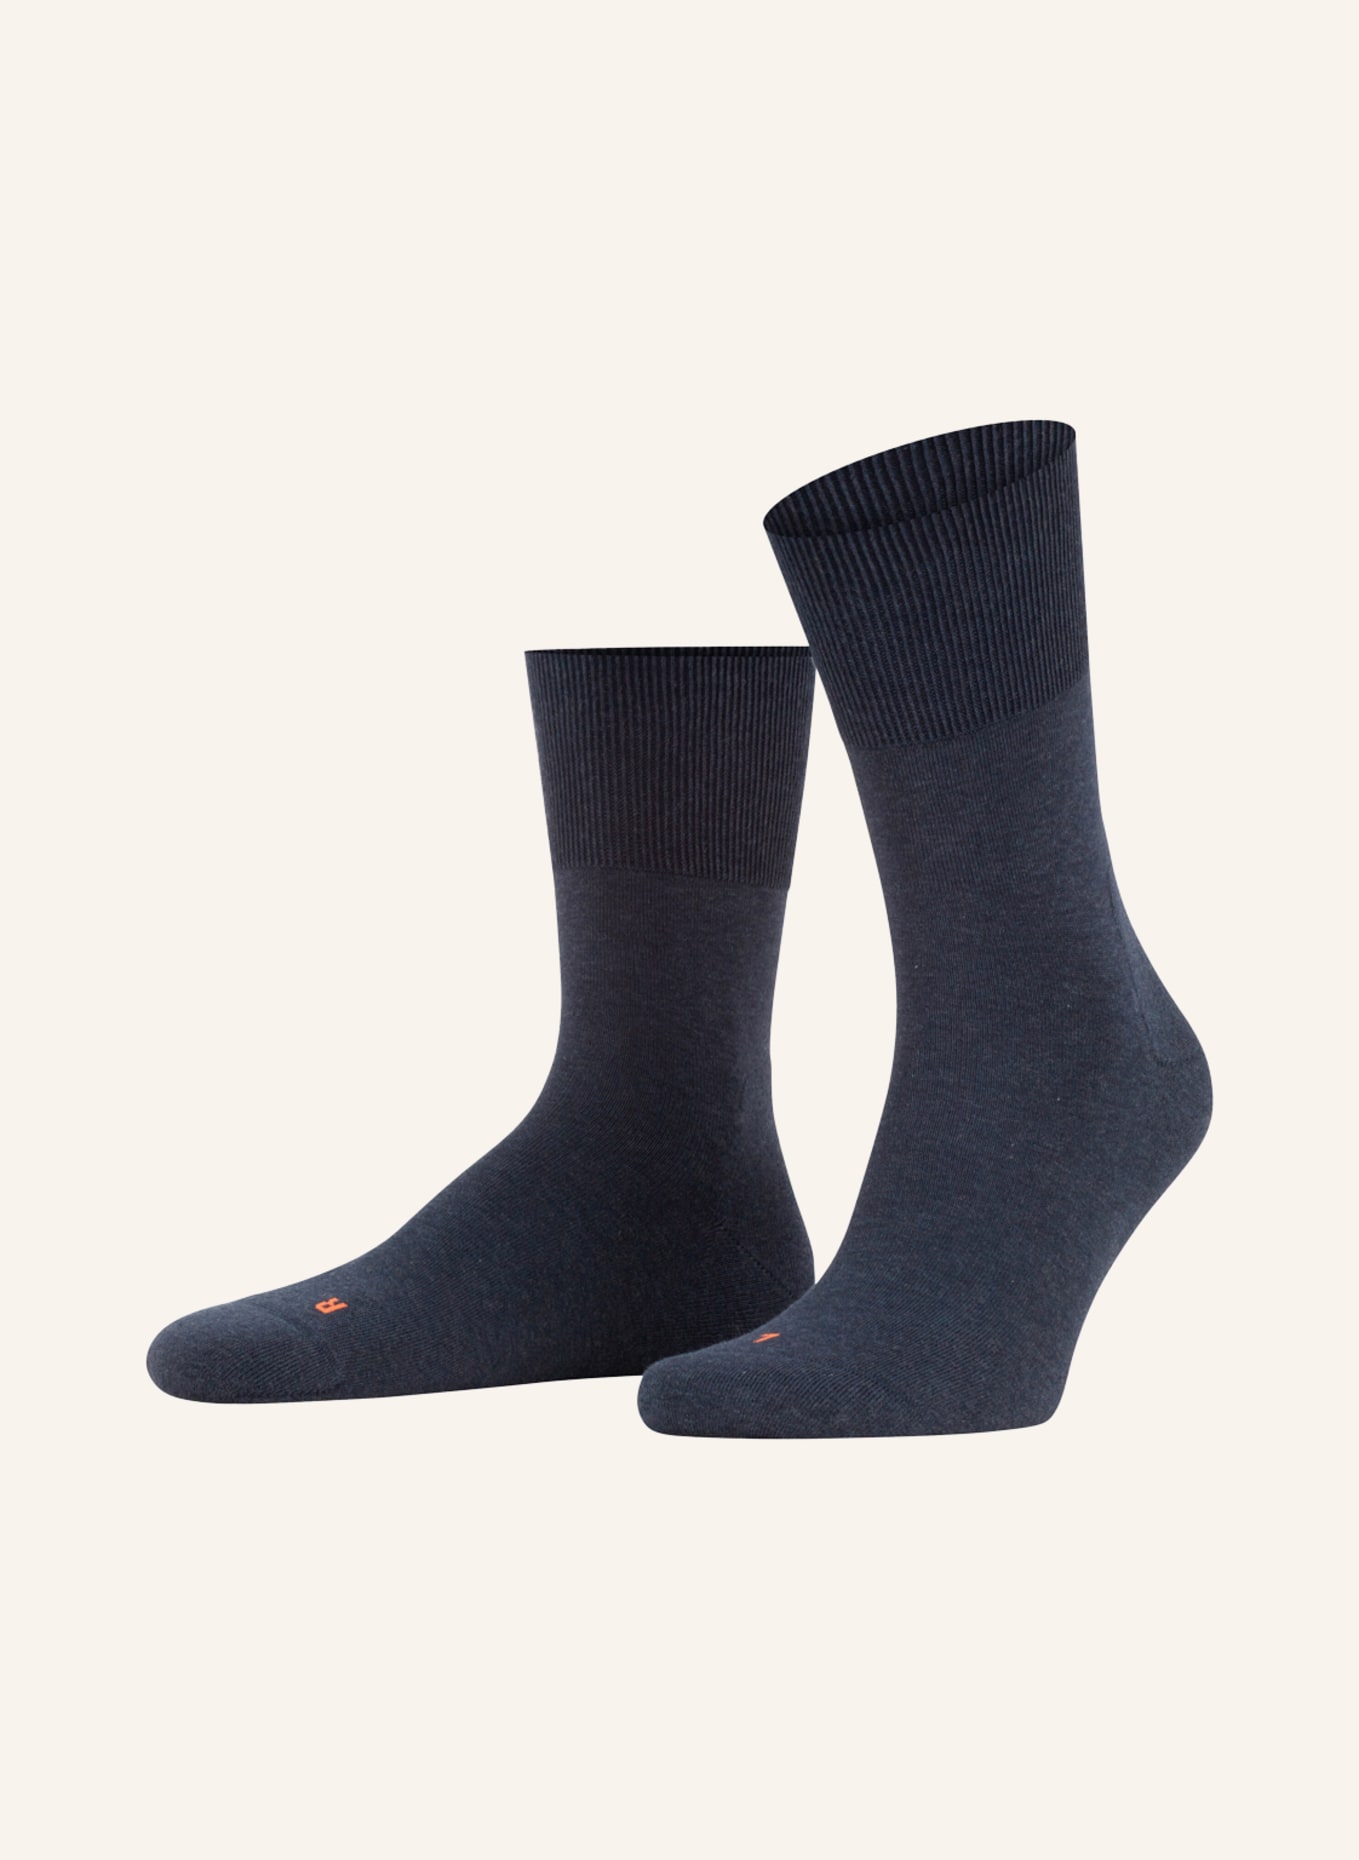 FALKE Socken RUN ERGO, Farbe: 6490 NAVYBLUE M (Bild 1)